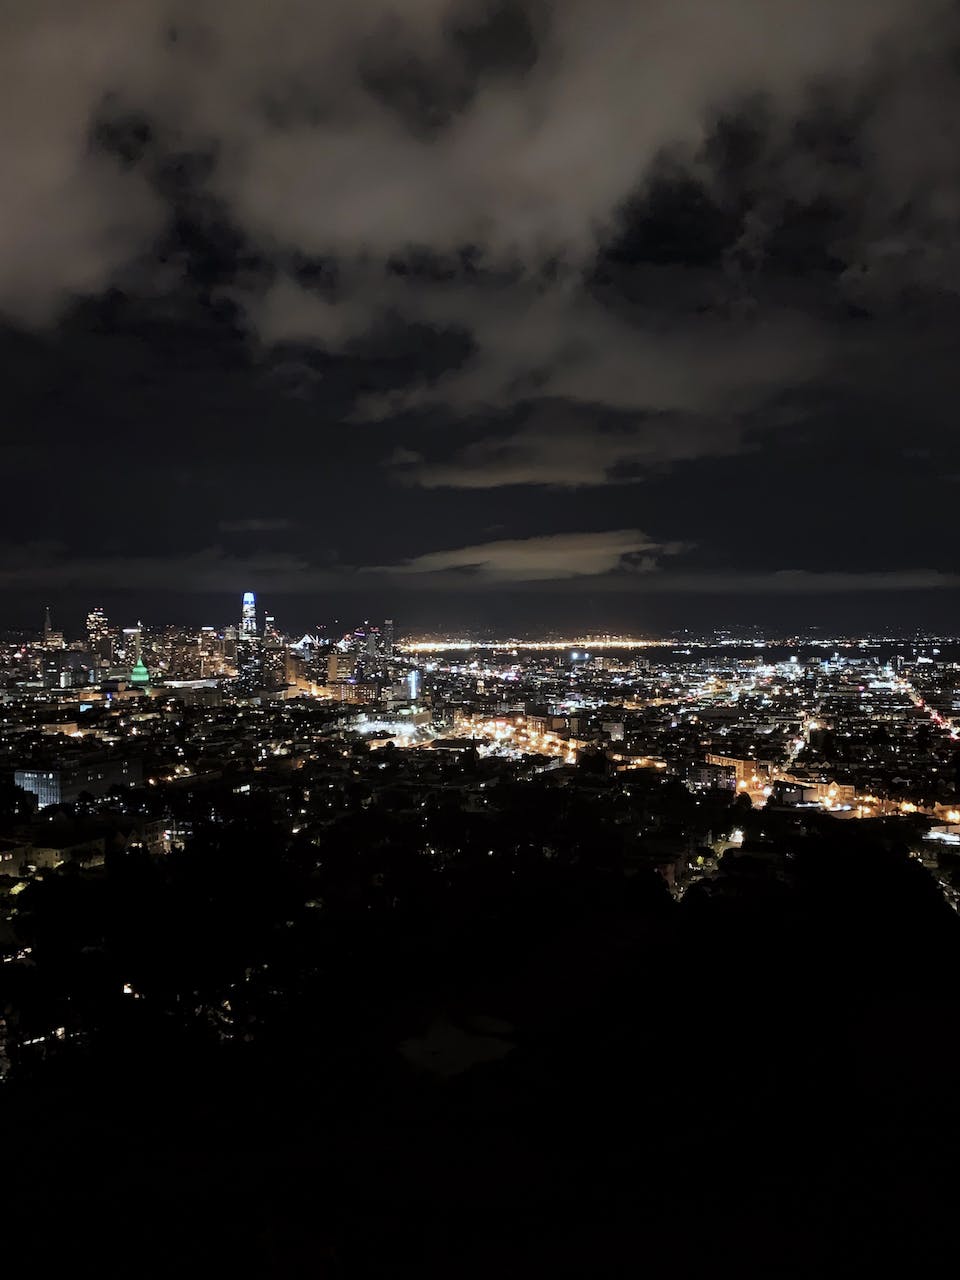 San Francisco at night, seen from Corona Heights Park